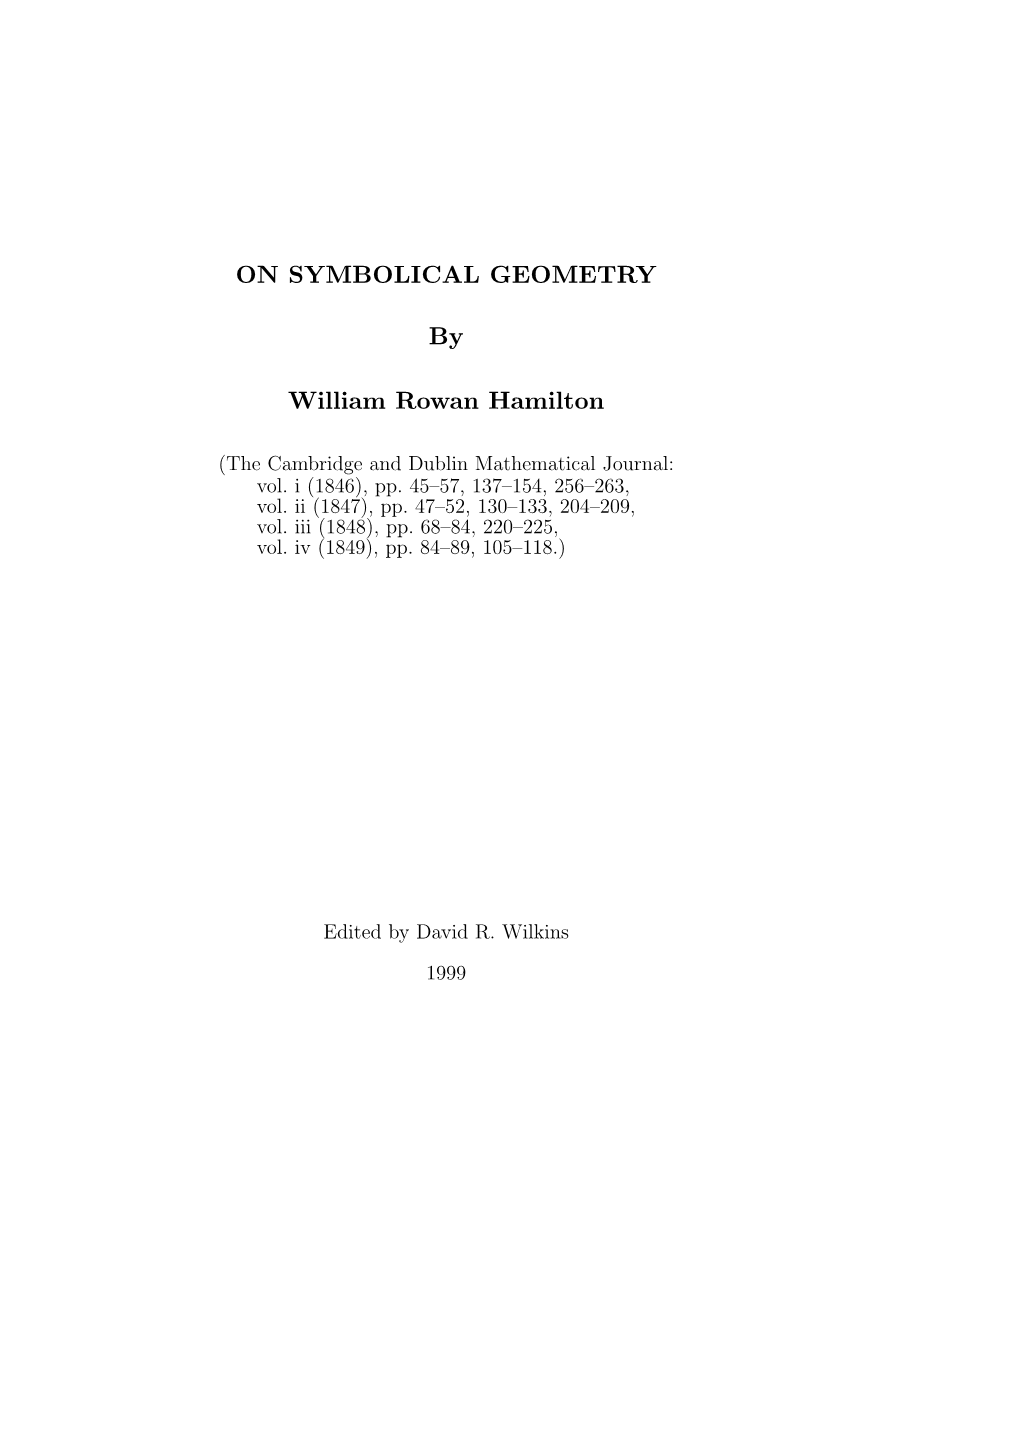 On Symbolic Geometry (1839) by William Rowan Hamilton